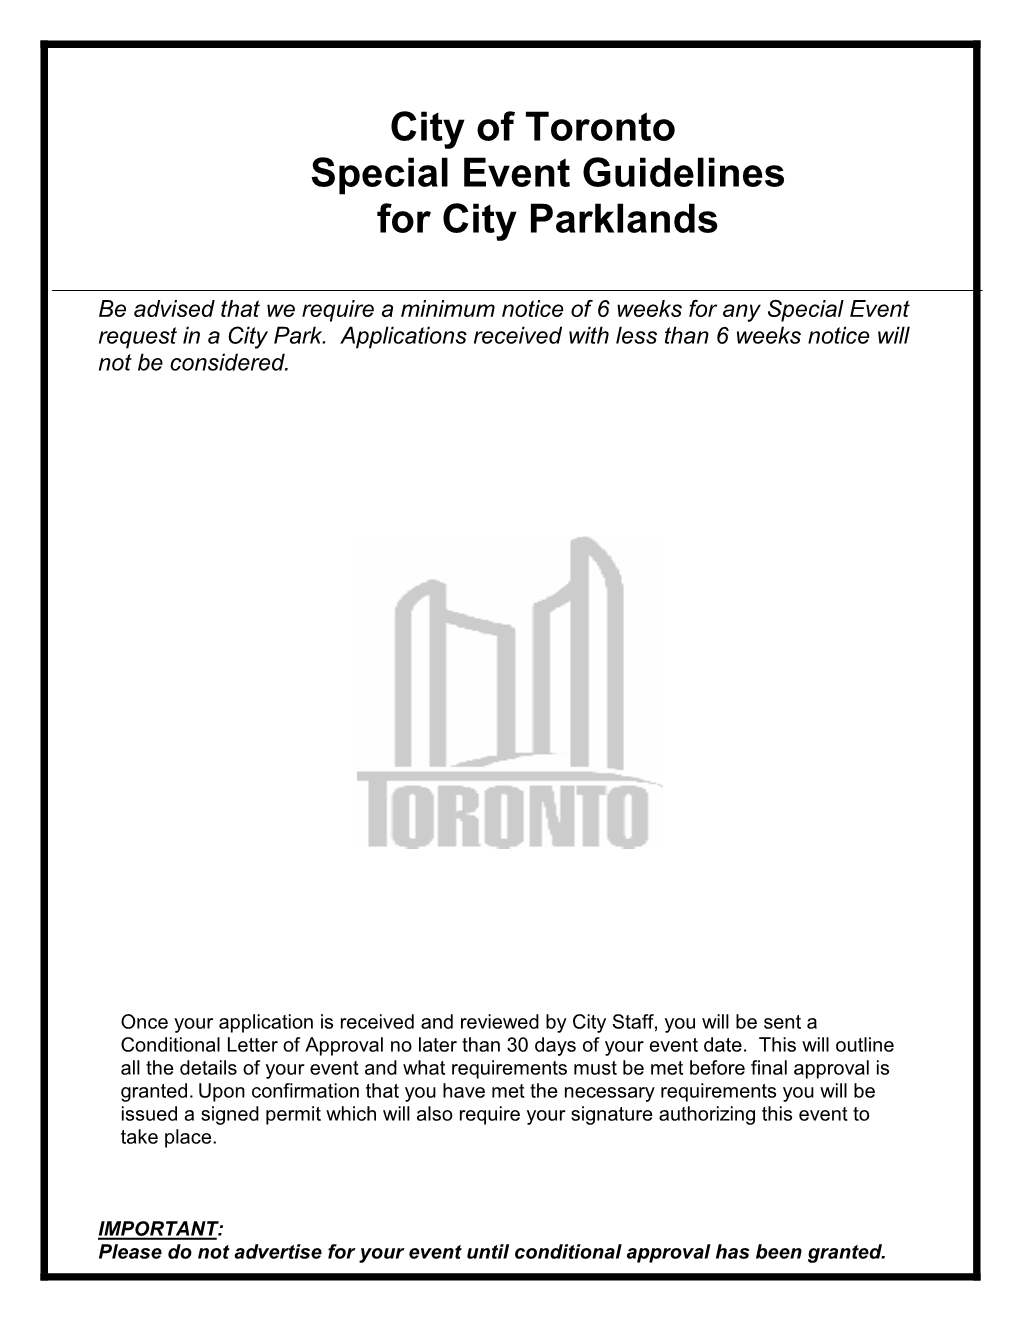 City of Toronto Special Event Guidelines for City Parklands